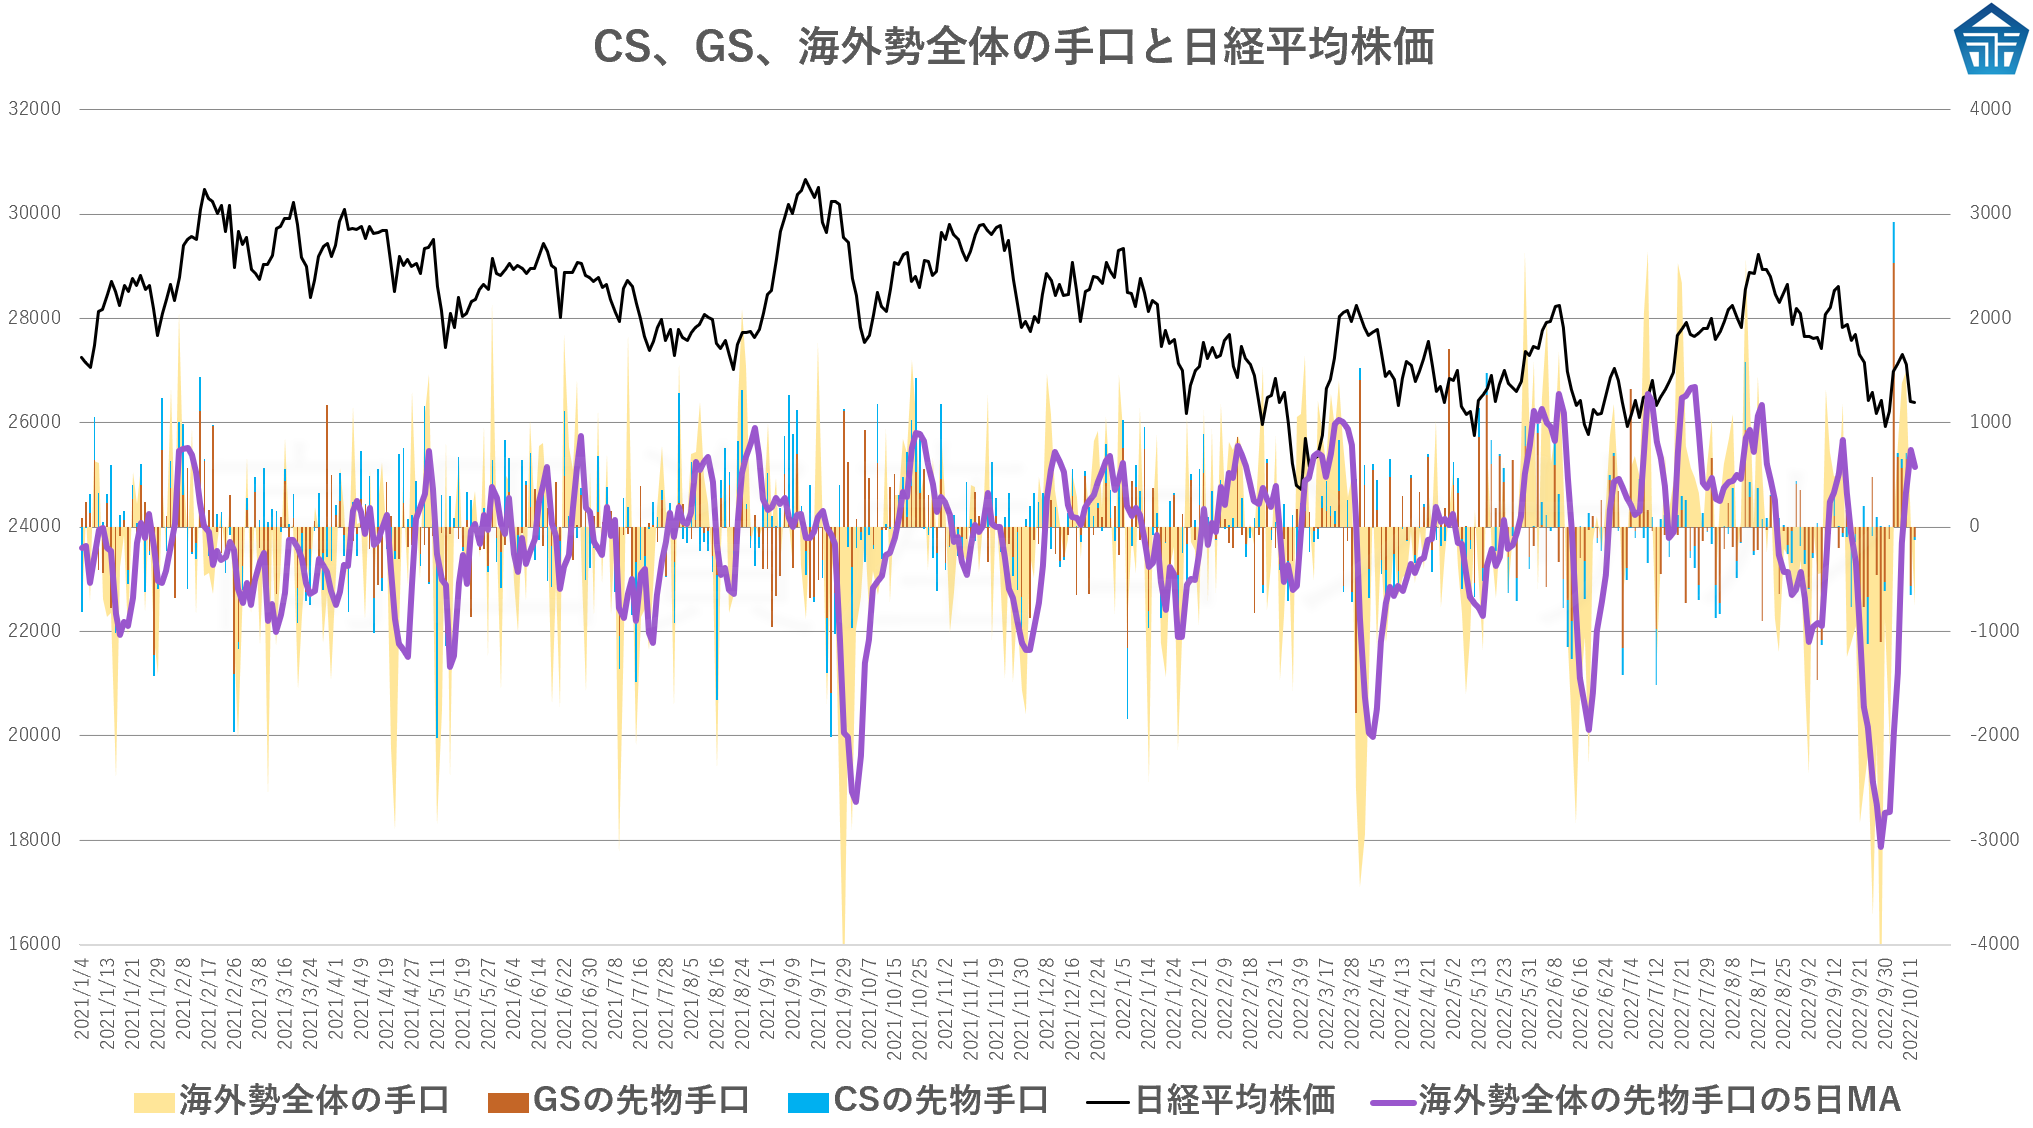 CS、GS、海外勢全体の手口と日経平均株価20221012trdrdr